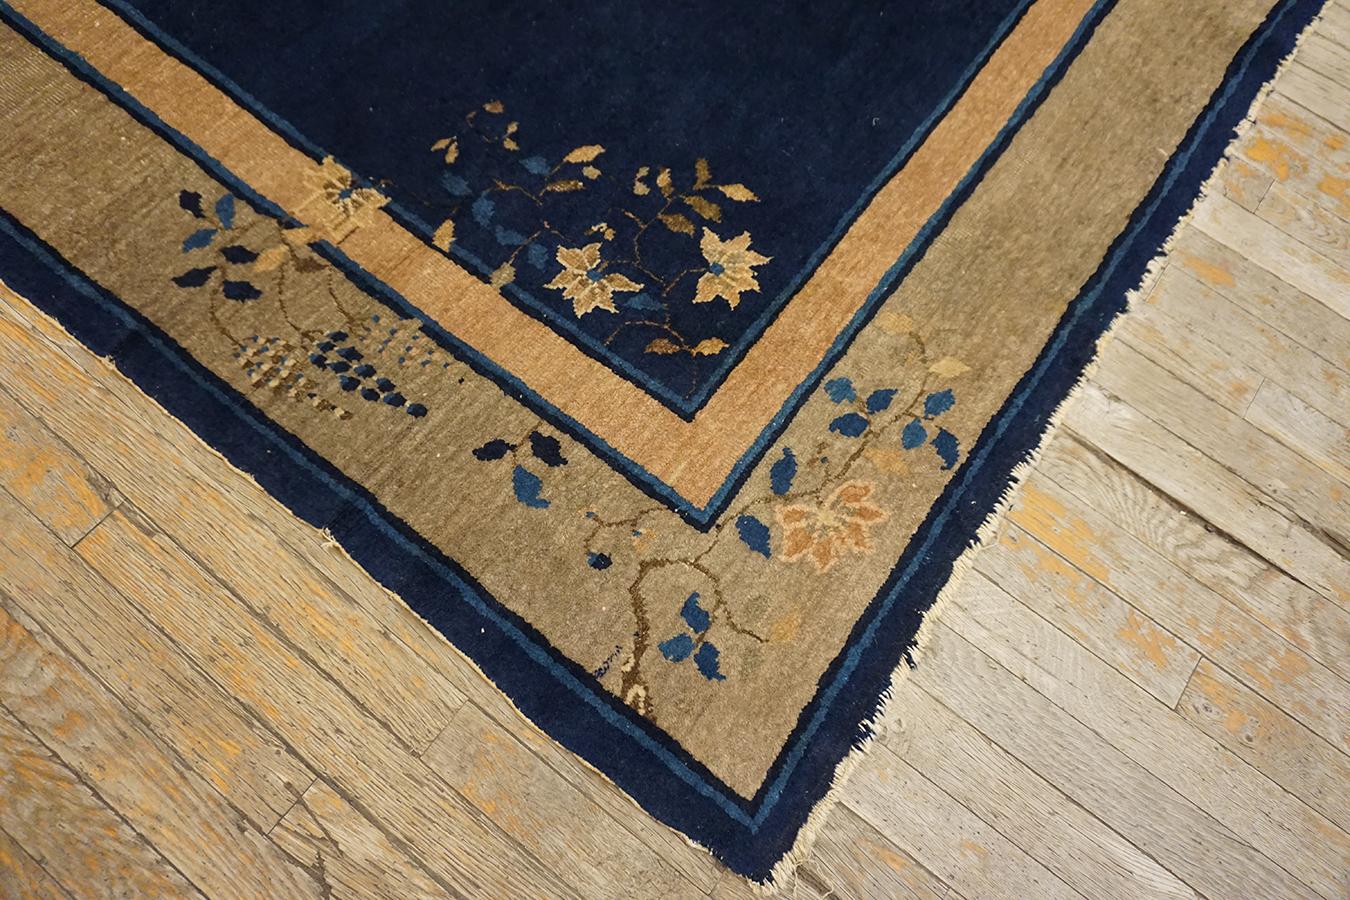 Early 20th Century Chinese Peking Carpet ( 6 x 8'7